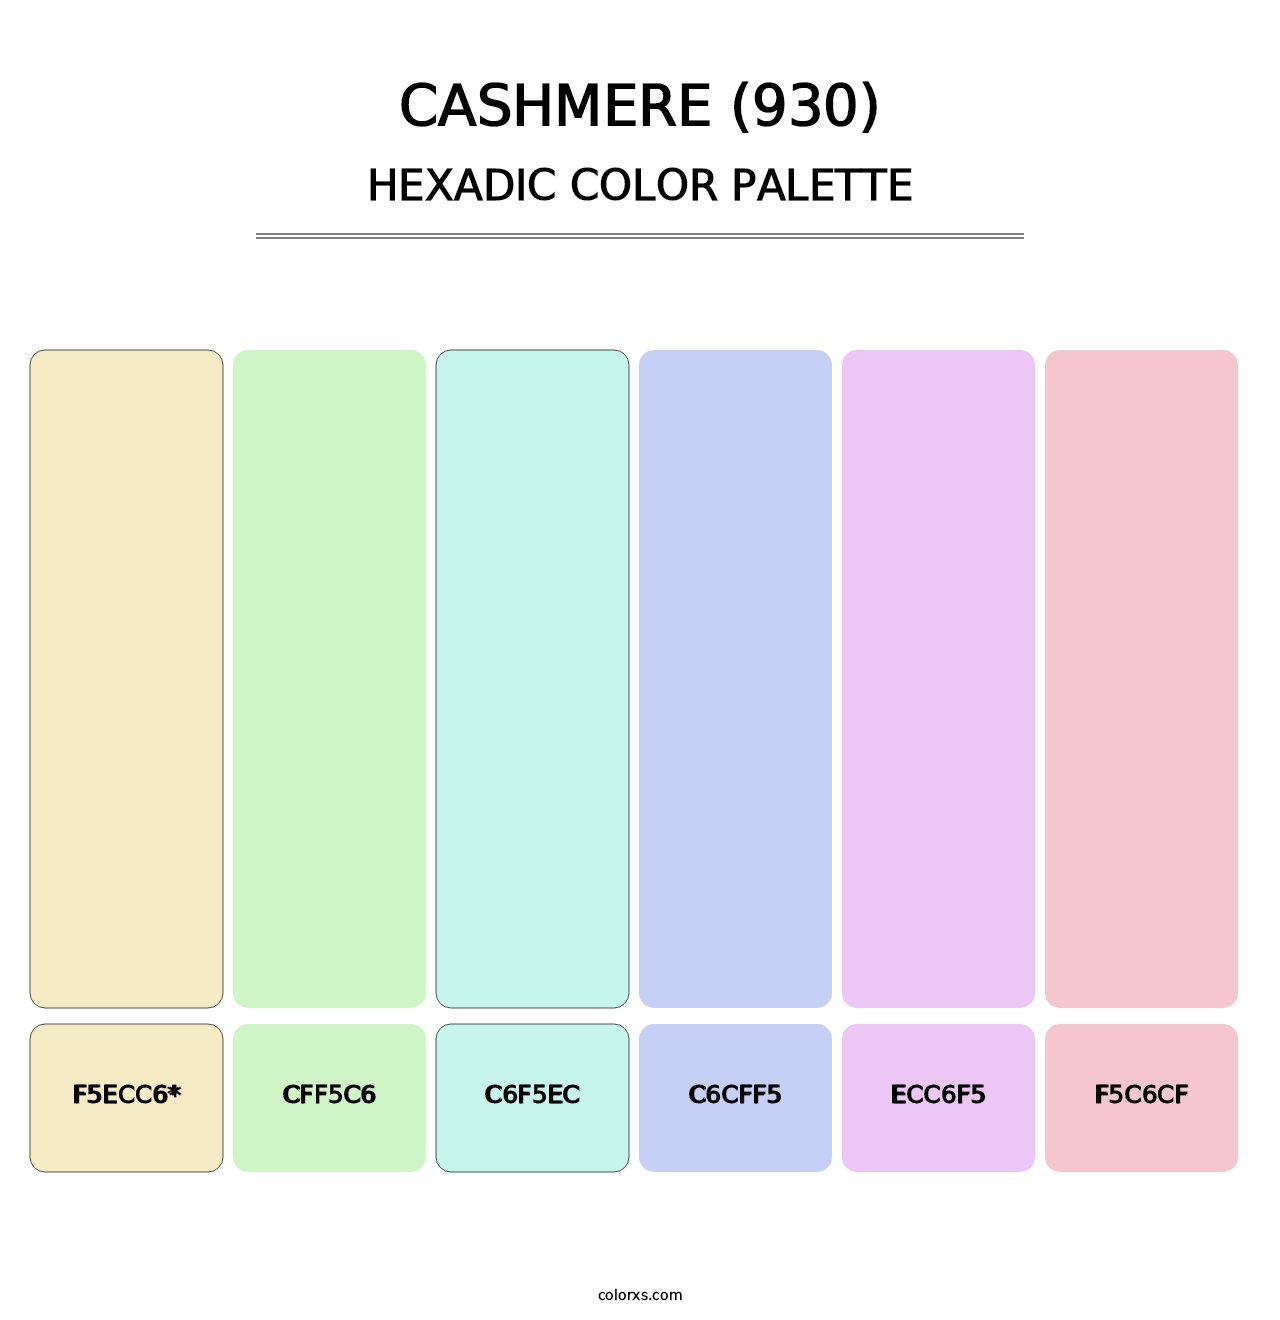 Cashmere (930) - Hexadic Color Palette